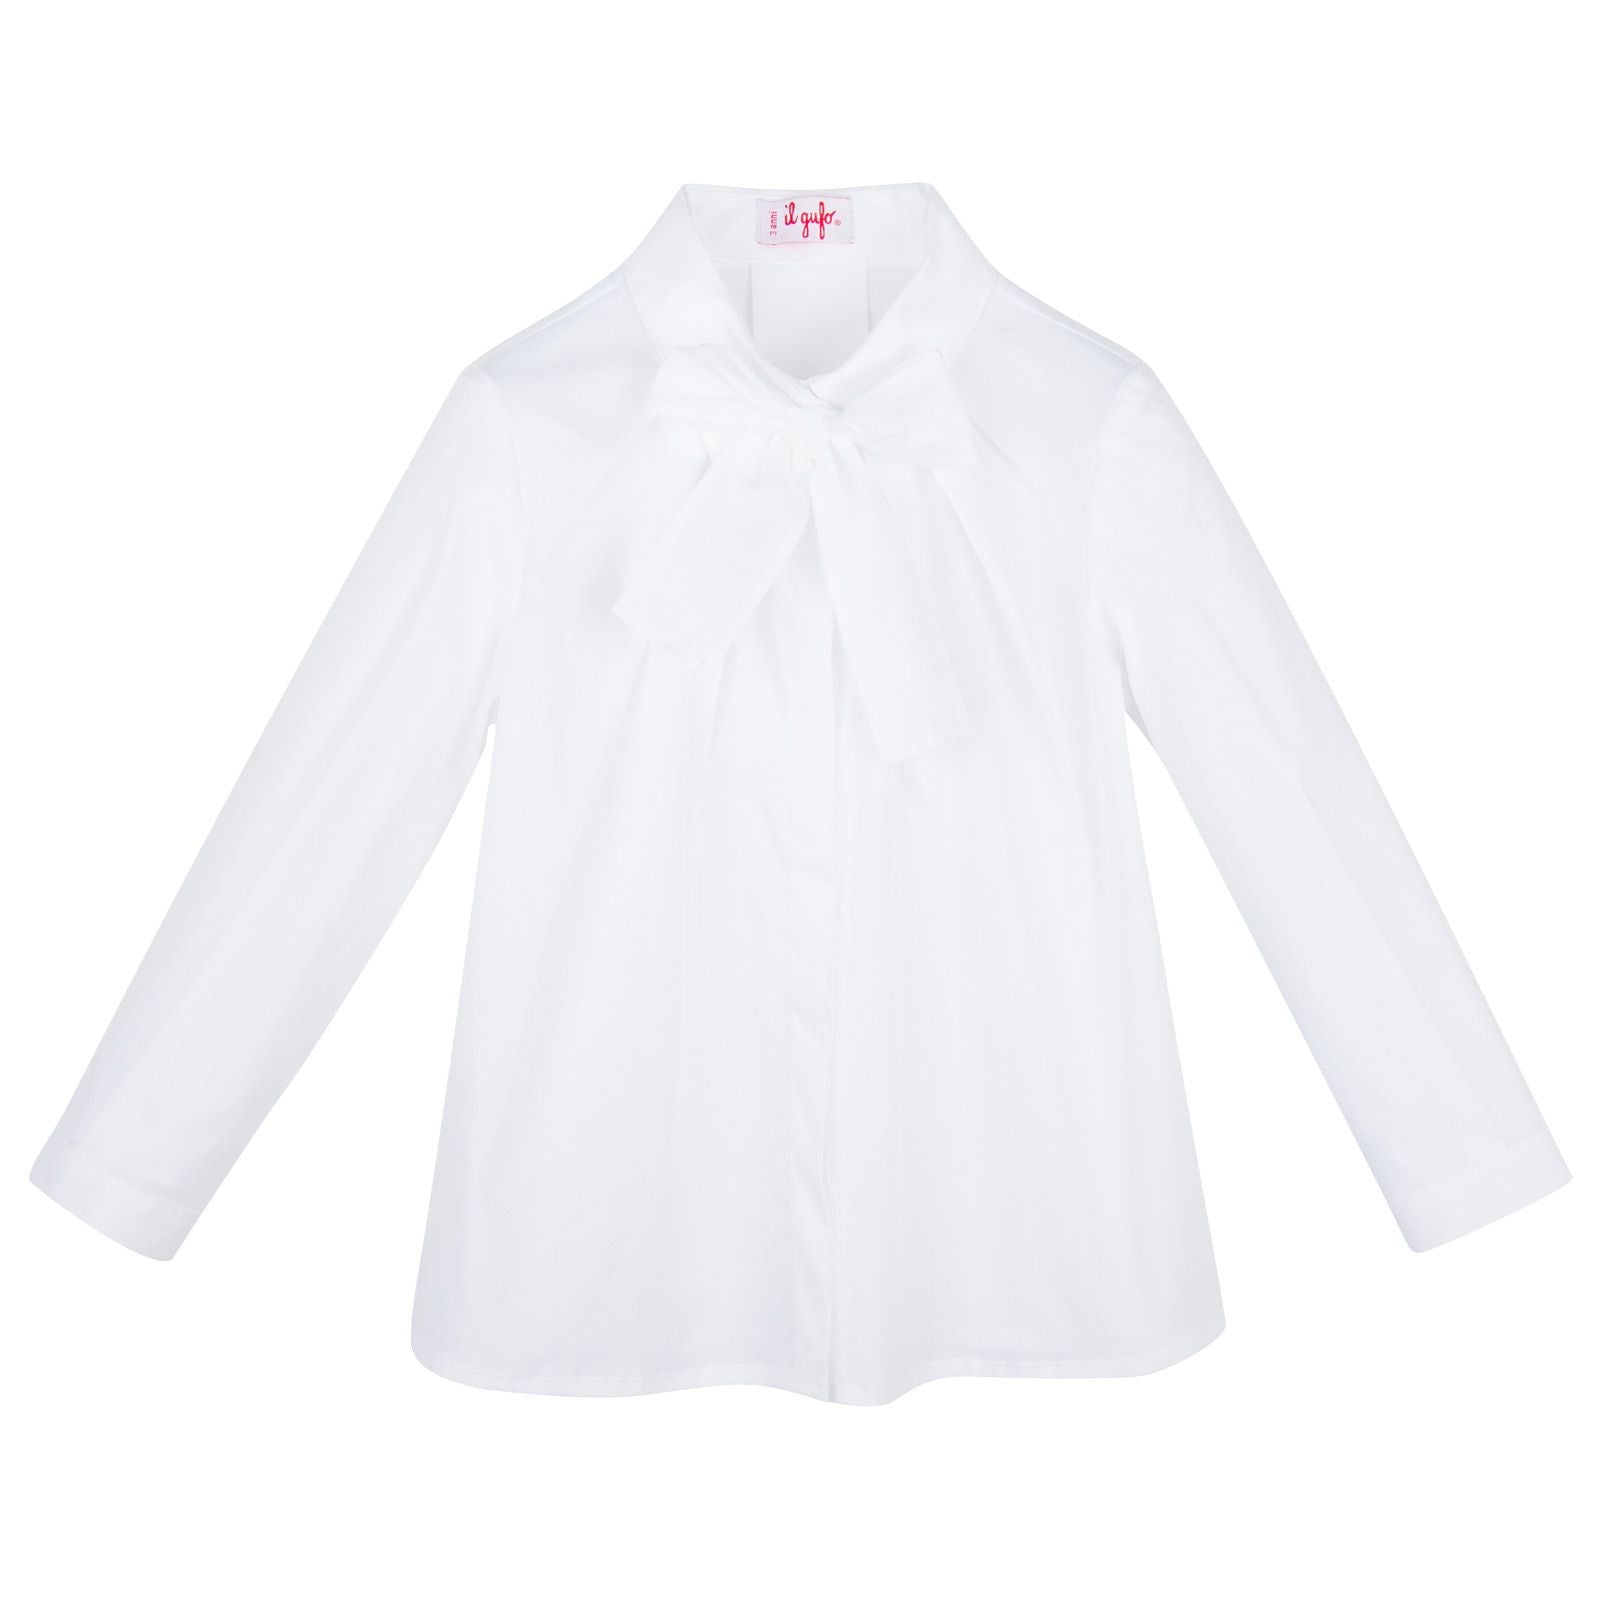 Girls White Cotton Blouse With Bow Trims - CÉMAROSE | Children's Fashion Store - 1